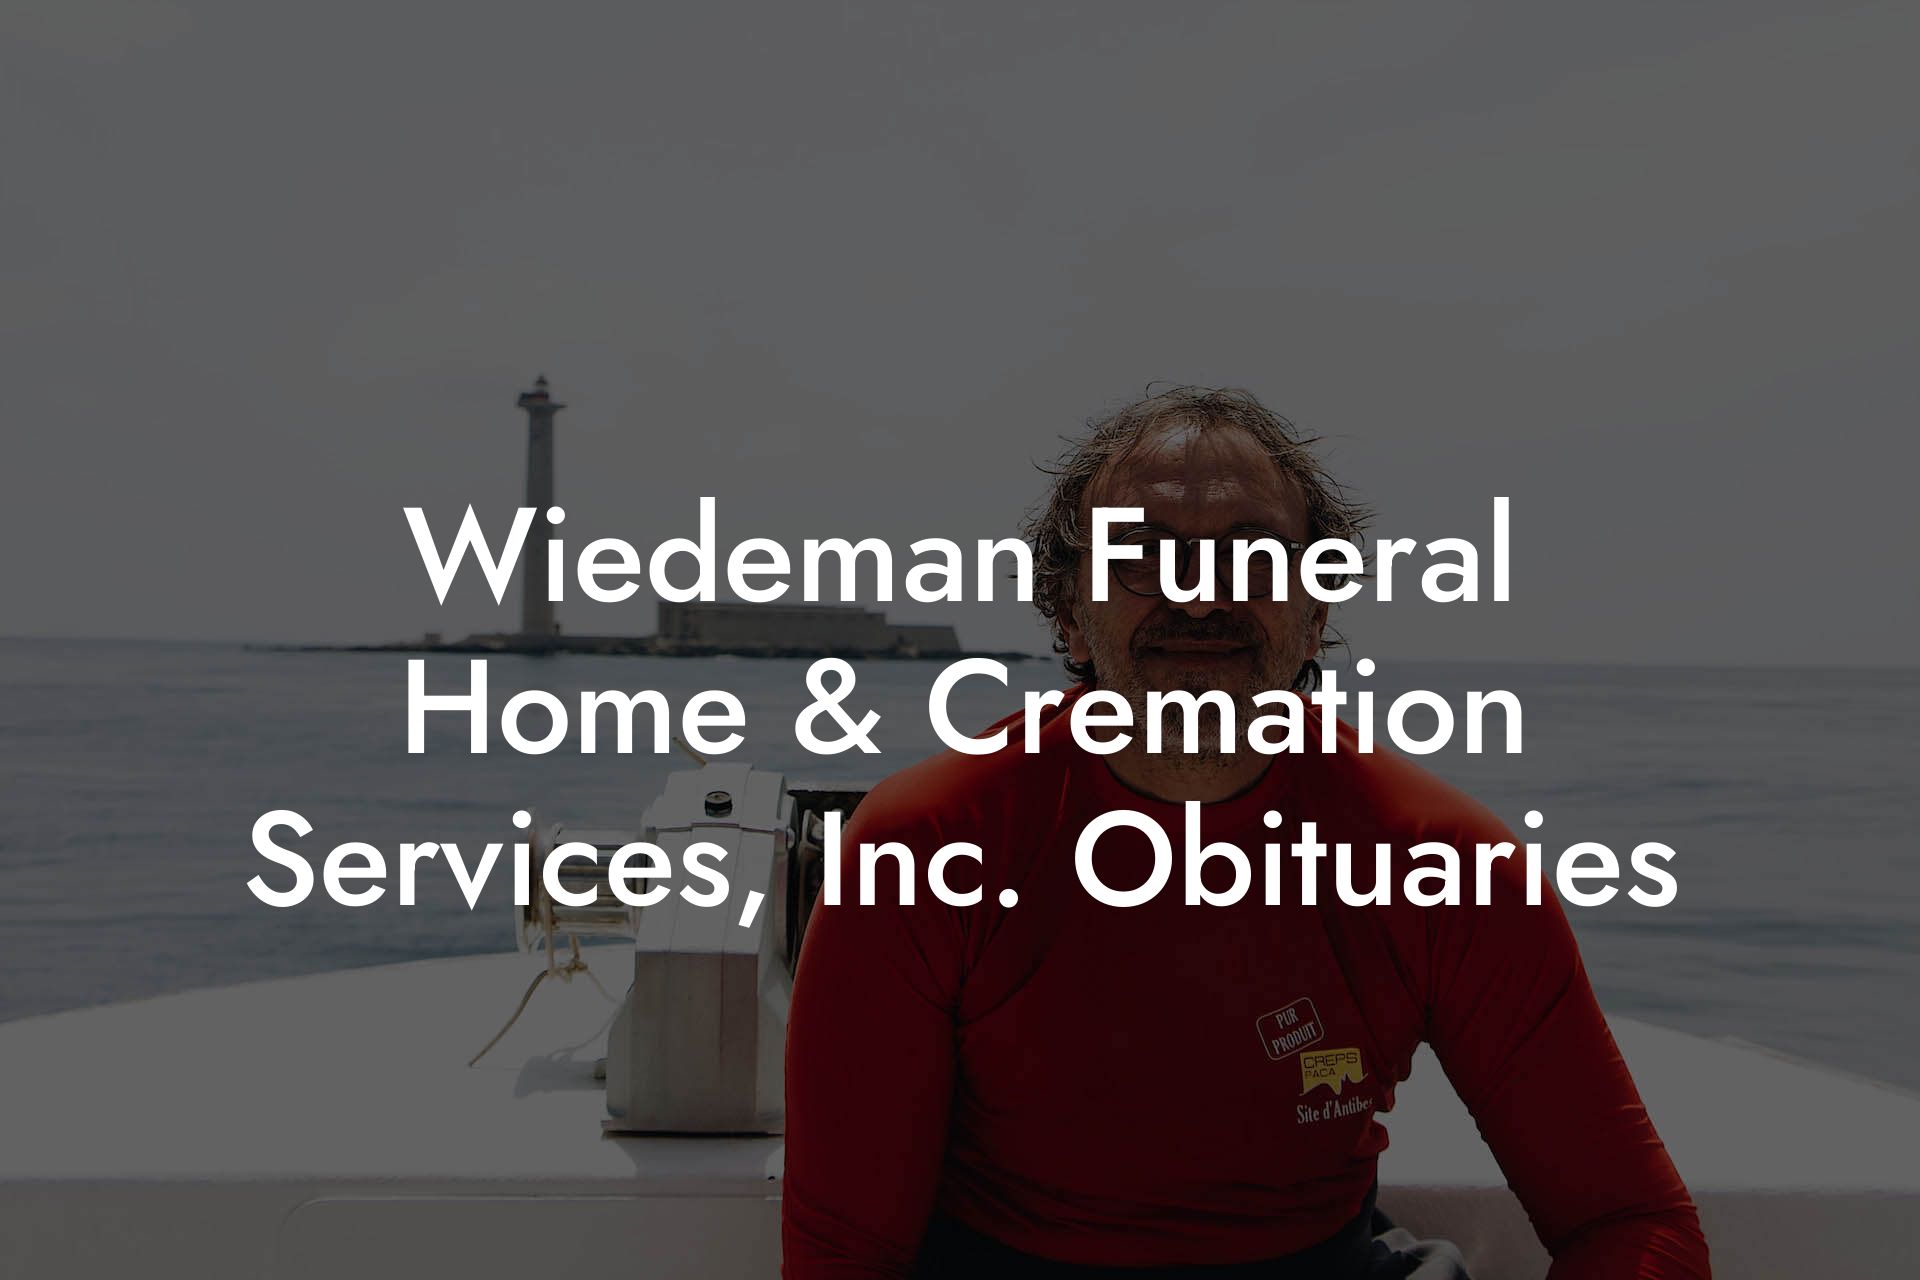 Wiedeman Funeral Home & Cremation Services, Inc. Obituaries